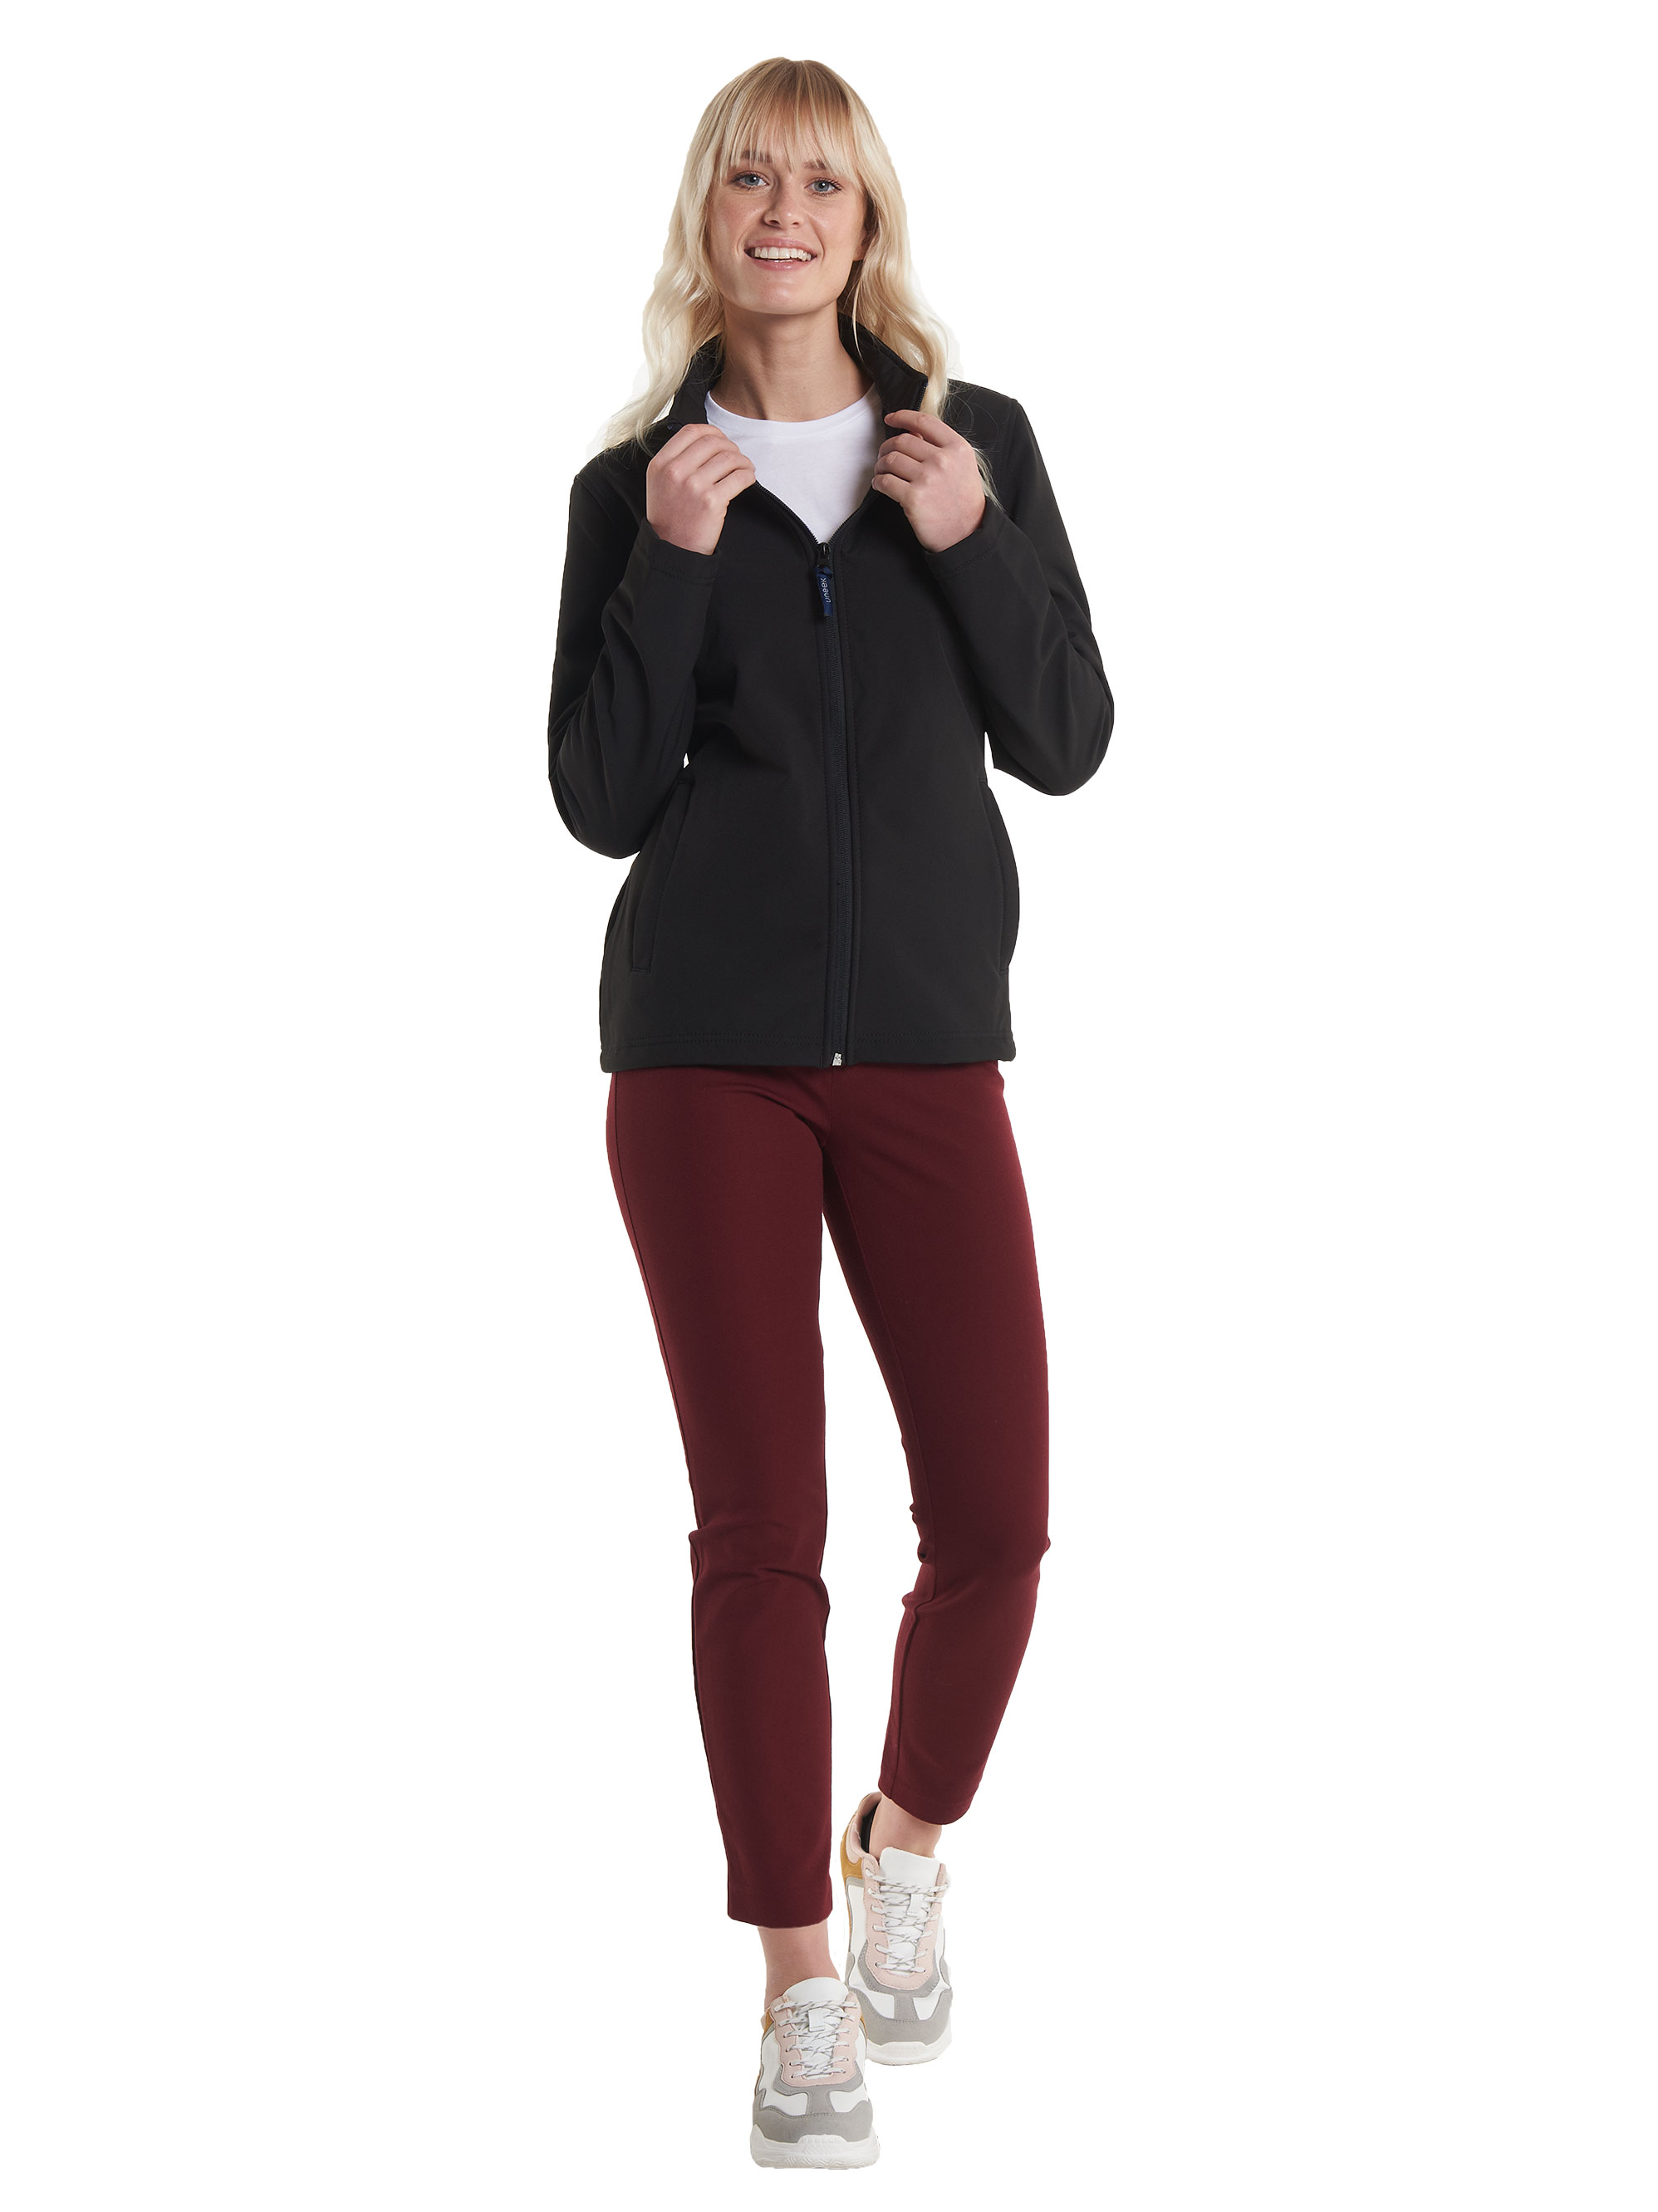 Uneek - UC613 - Ladies Classic Full Zip Soft Shell Jacket